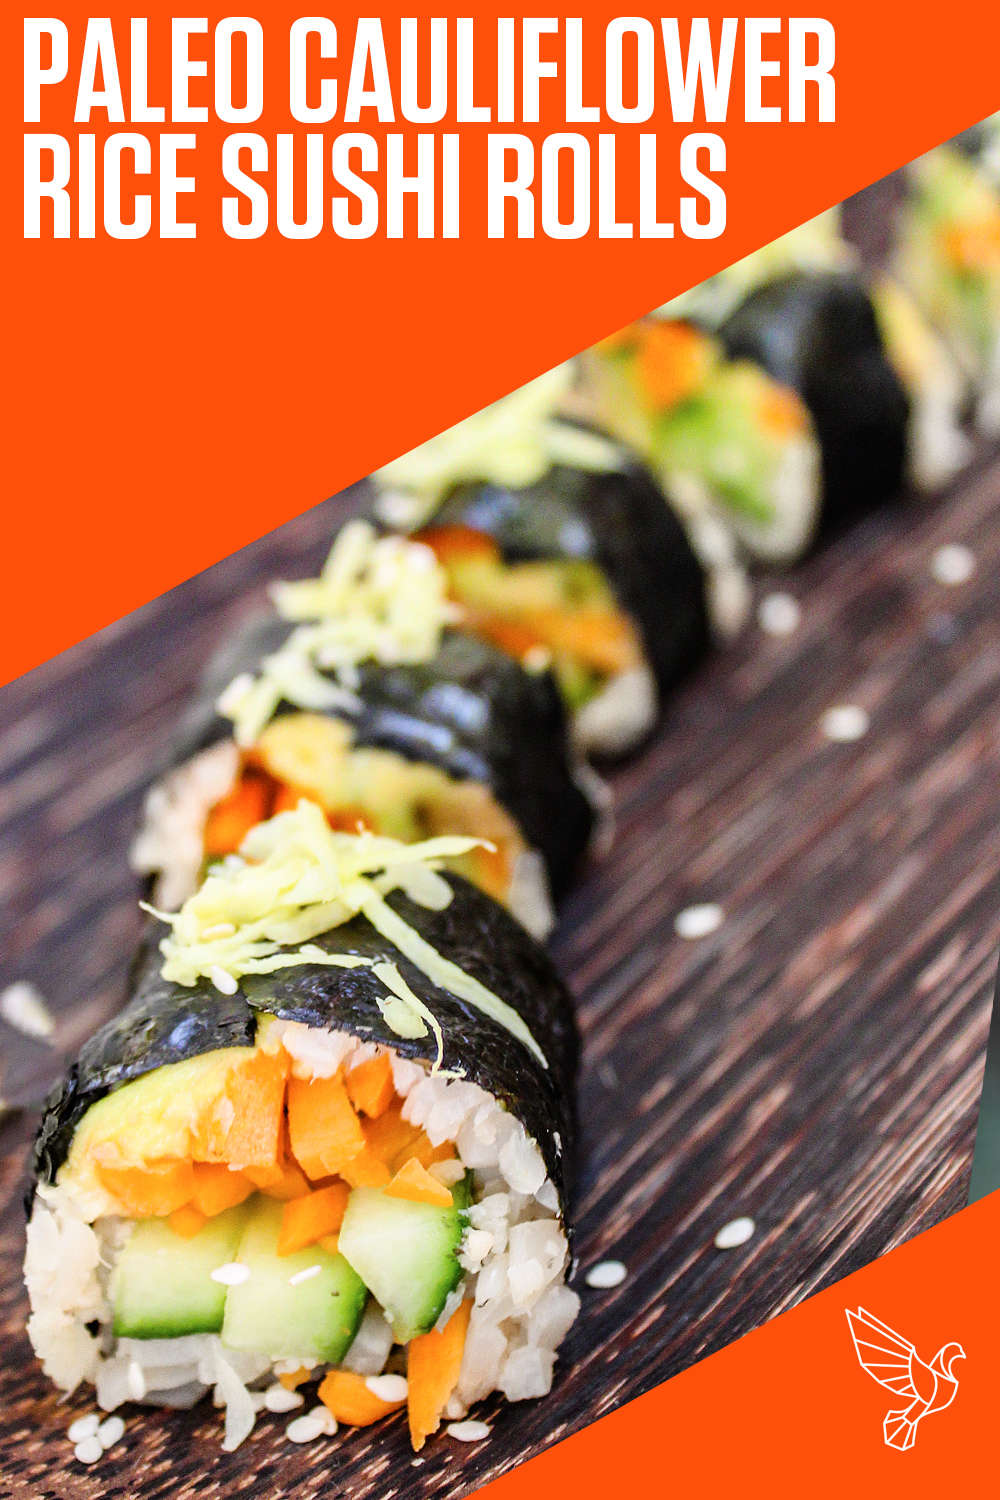 Paleo cauliflower rice sushi roll Pinterest card